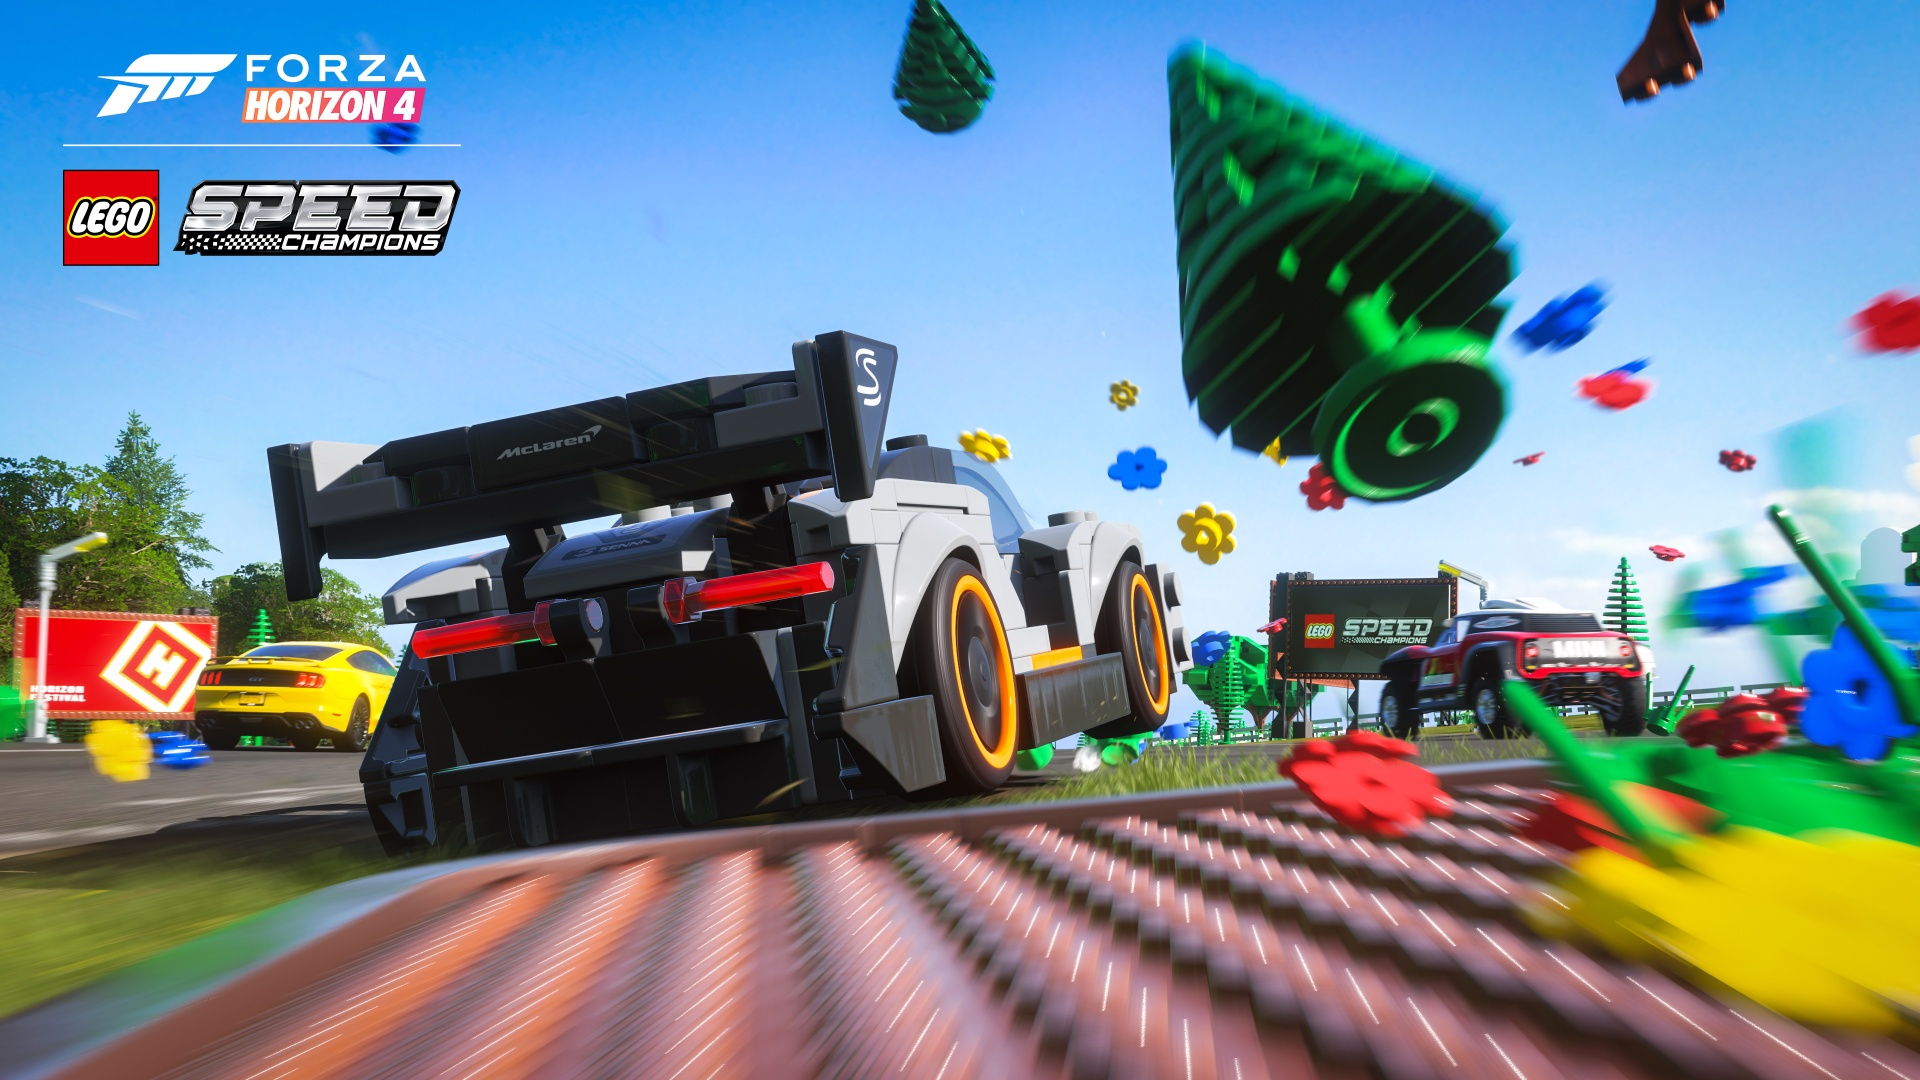 ForzaHorizon4 LEGO Speed Champions CrashDebris Screenshot 1